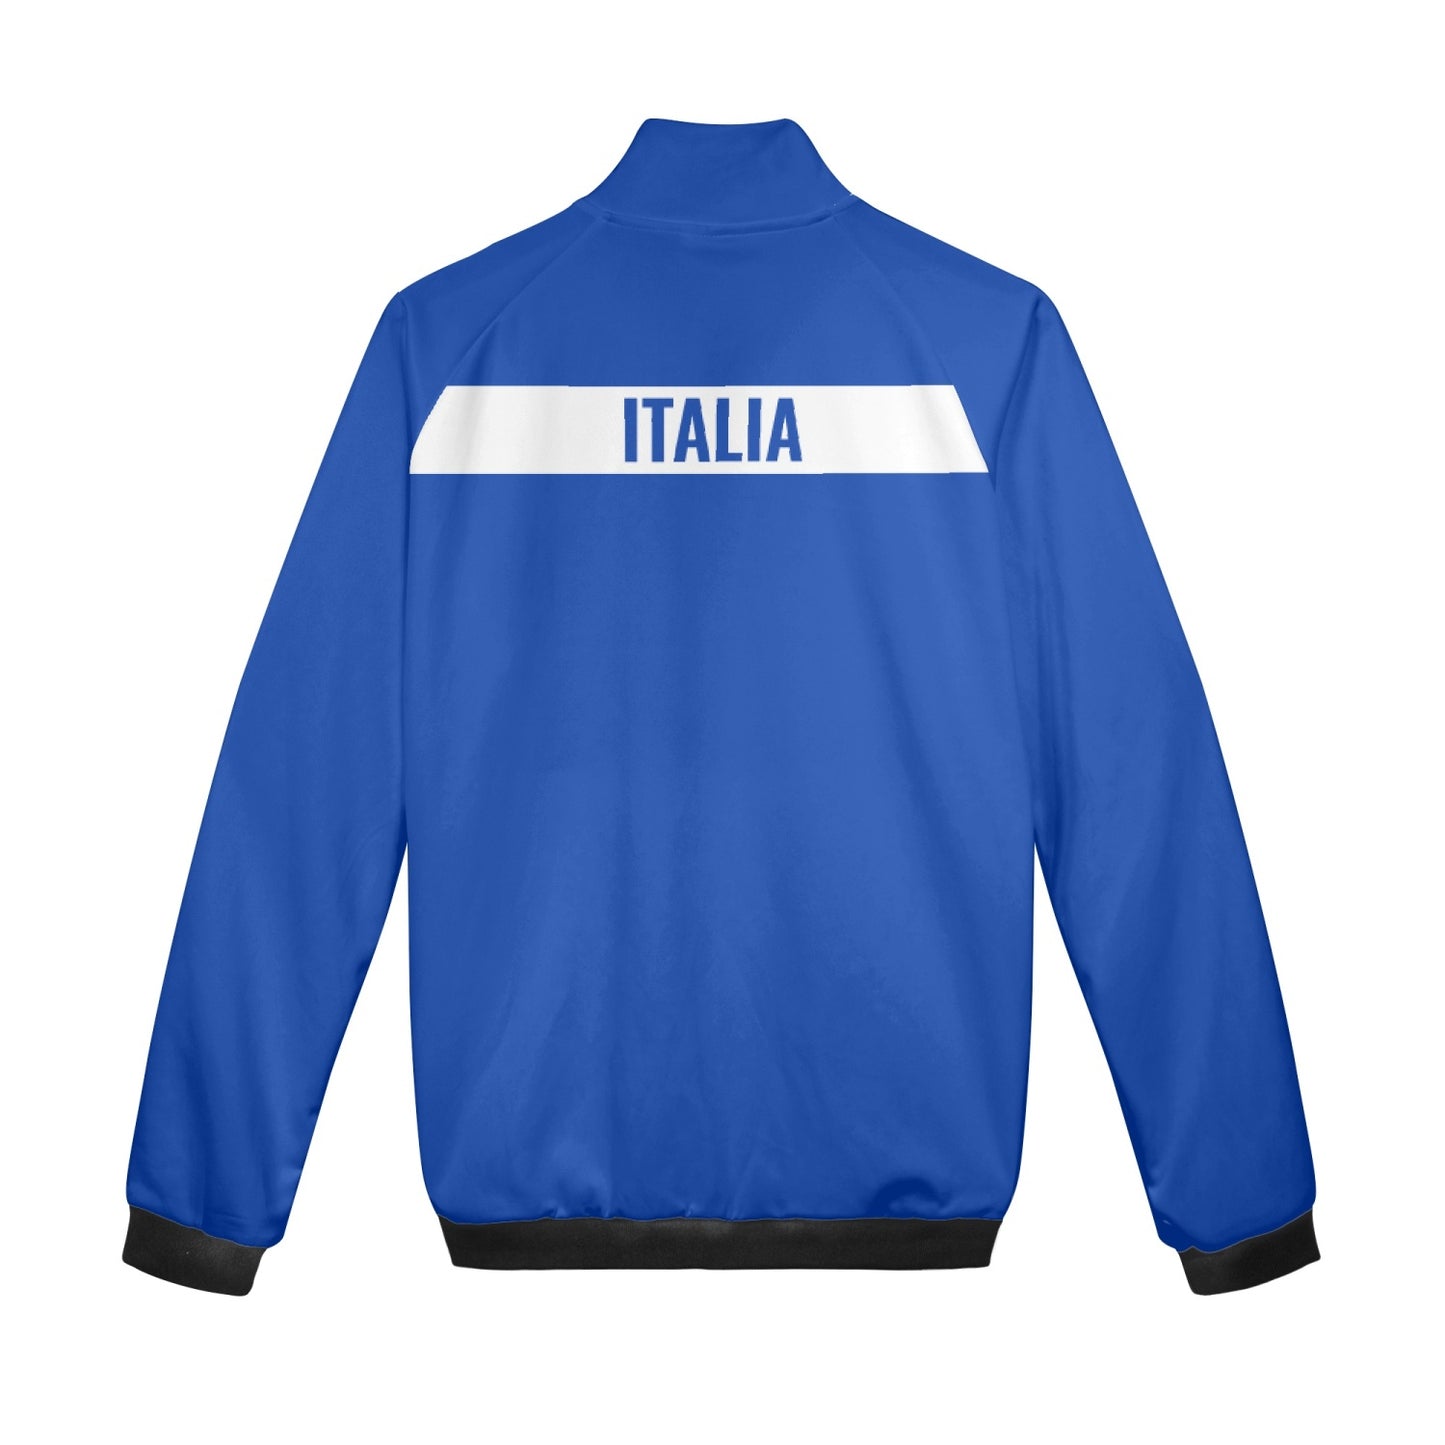 Italia zip Jacket azure